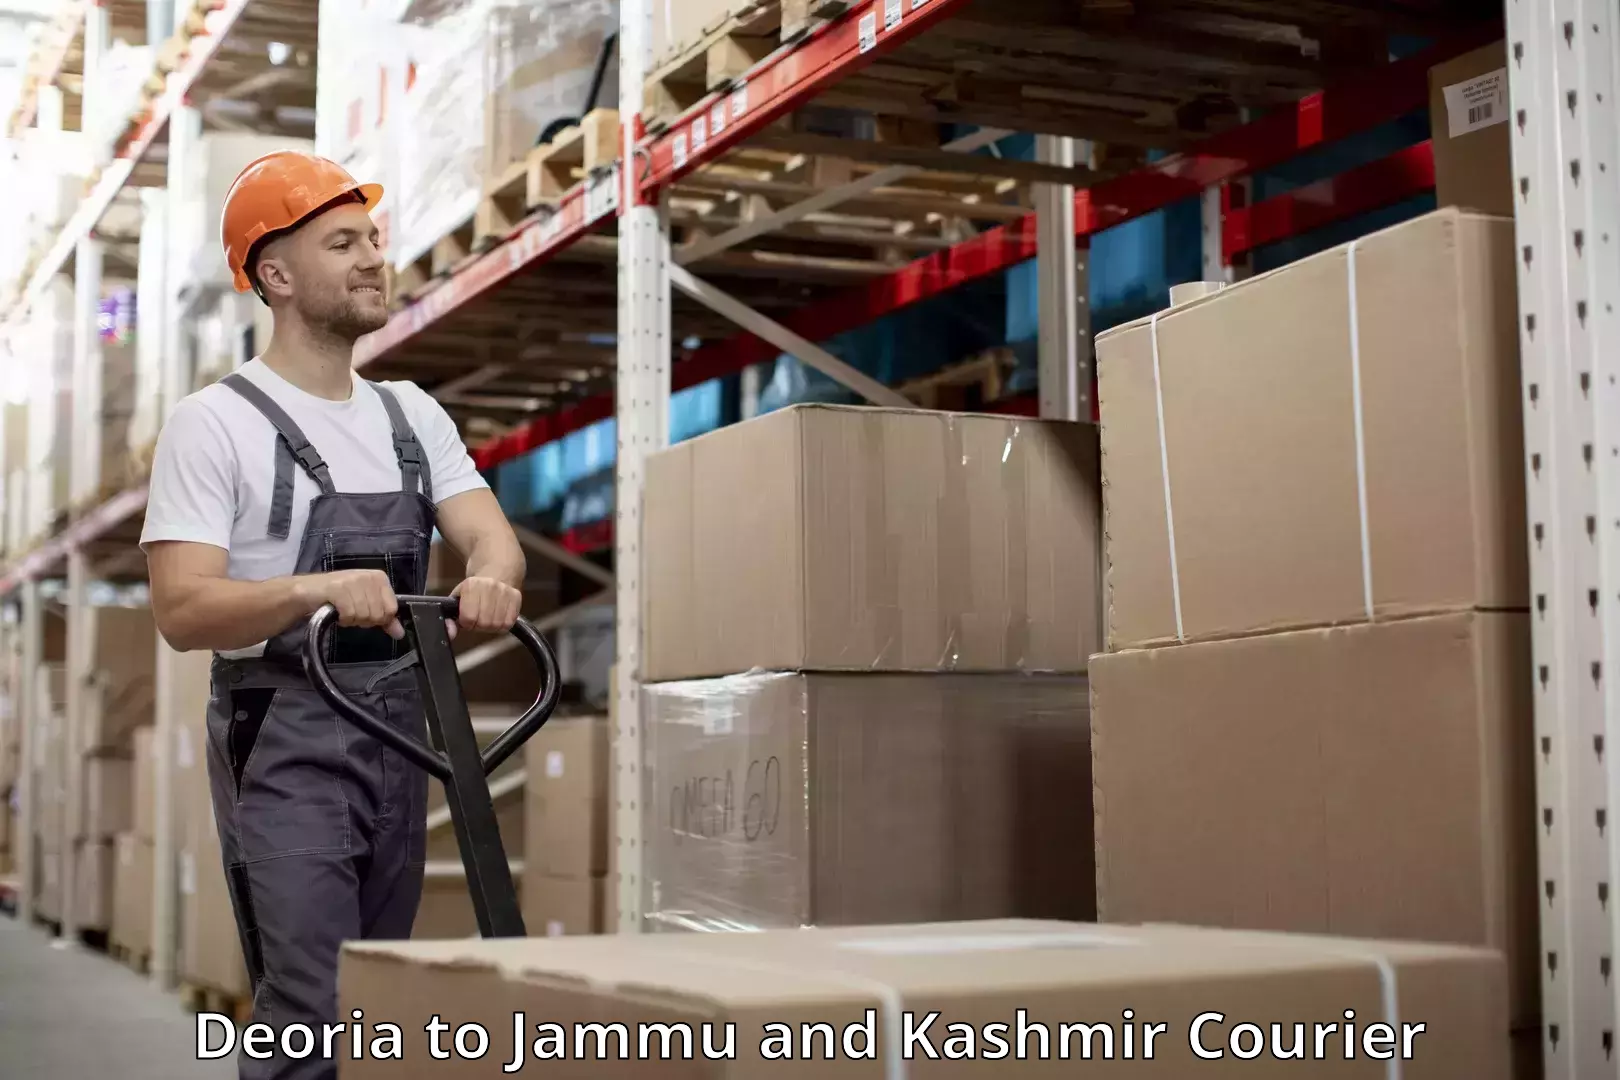 Same day luggage service Deoria to Jammu and Kashmir